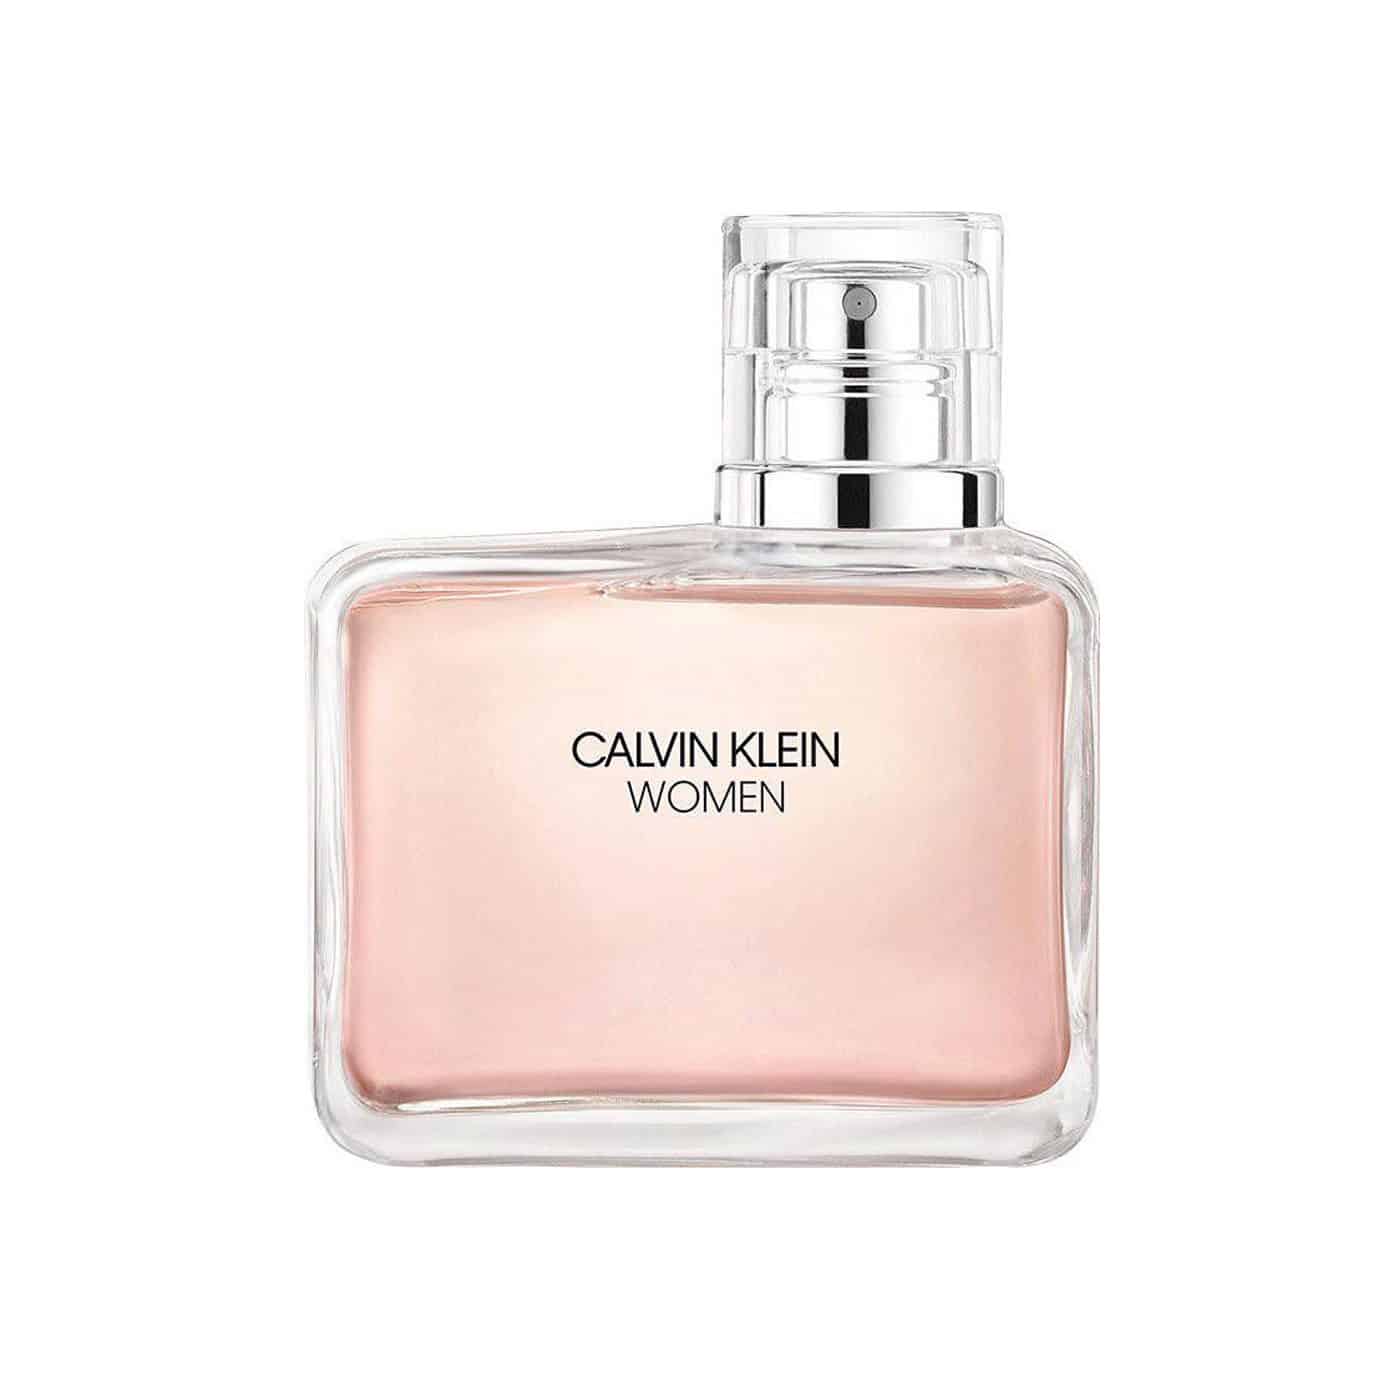 CK perfume for ladies 